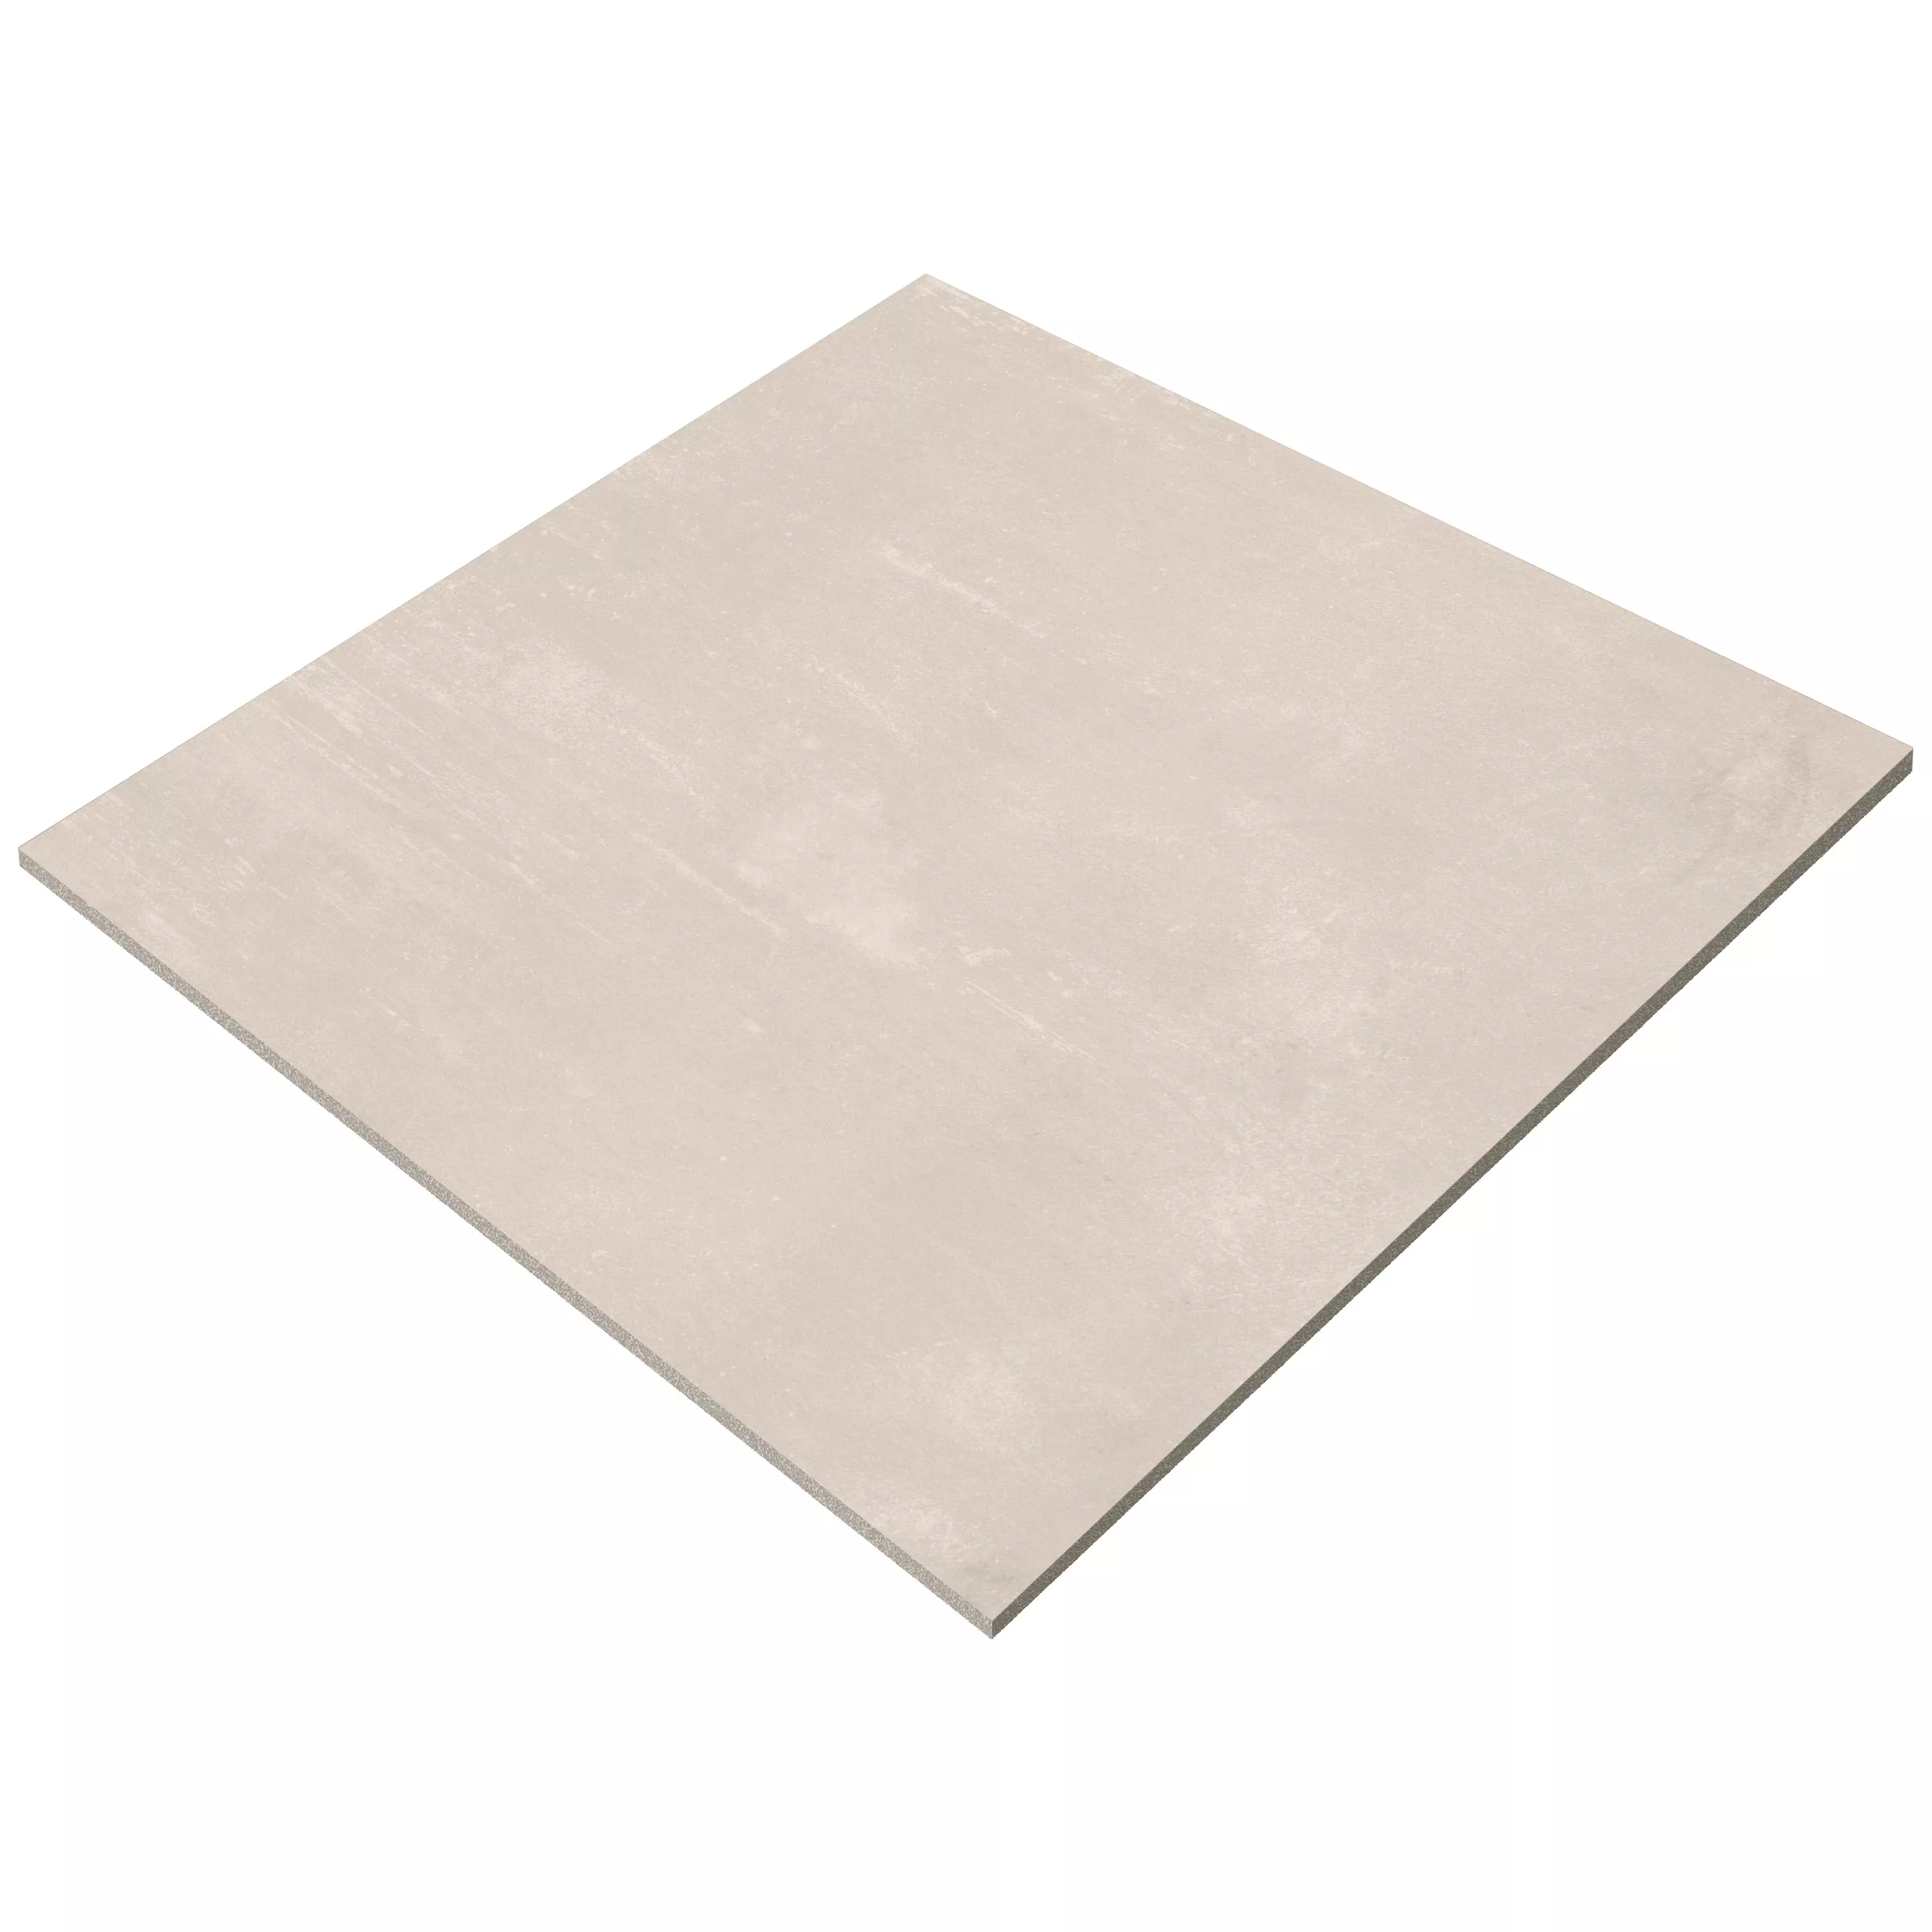 Sample Floor Tiles Castlebrook Stone Optic Creme 60x60cm